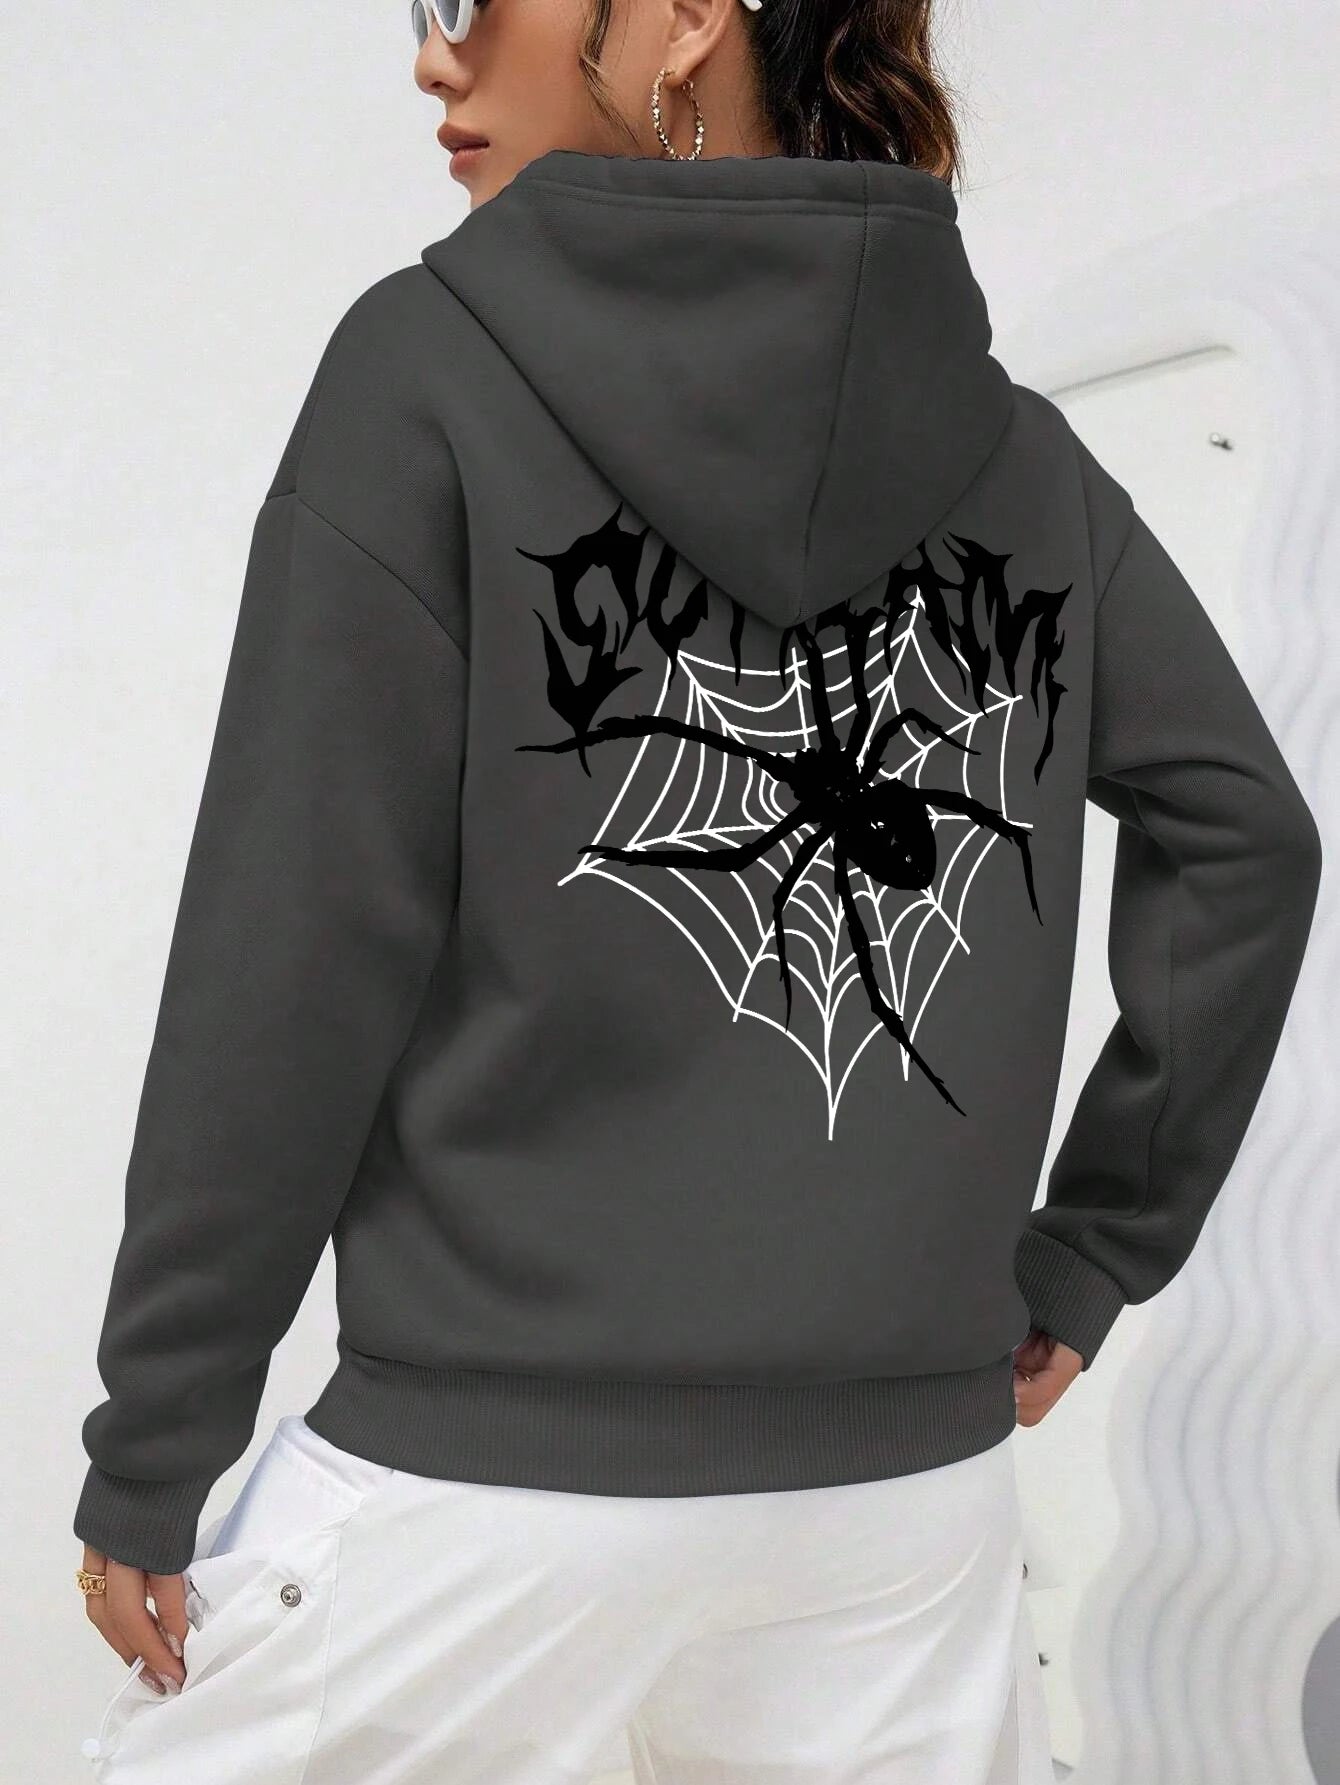 Scream Spiders & Cobwebs Printing Women Hoodies Harajuku Oversize Hoody Fashion Loose Clothing Comfortable Sweatshirt Female